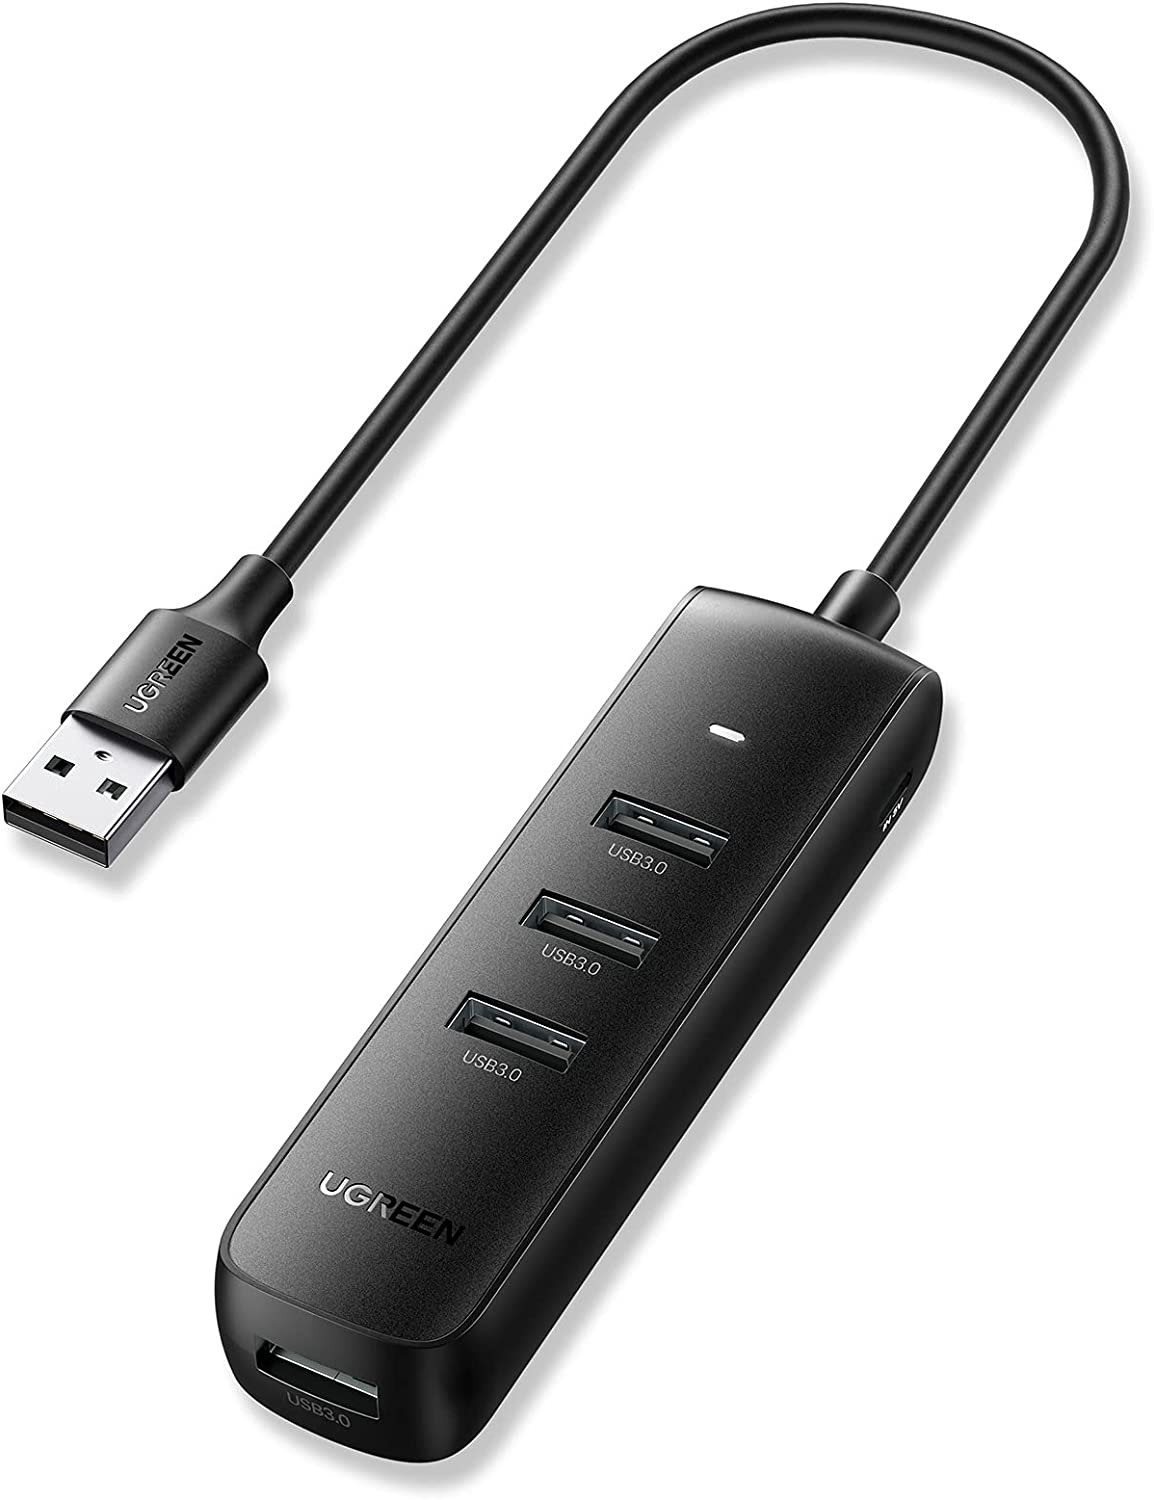 UGREEN USB 3.0 4-Port Hub 0.25m (Black)